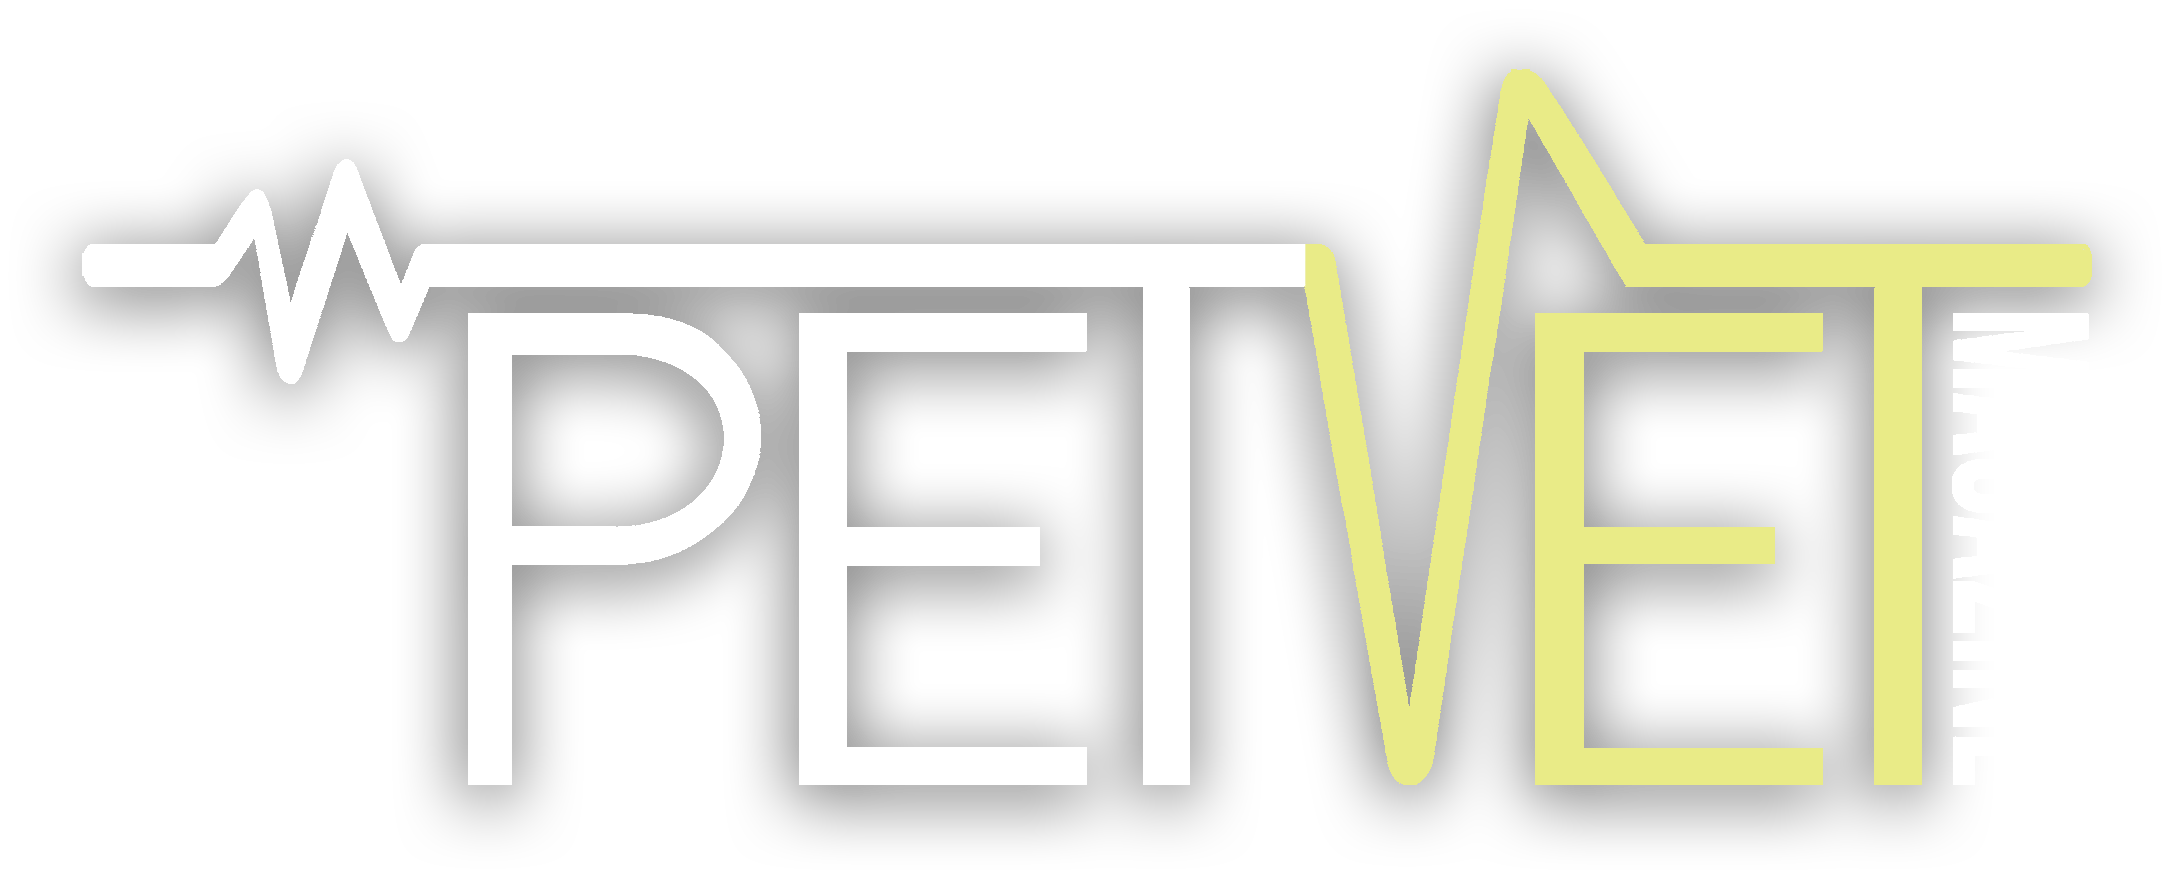 Pet Vet Magazine logo